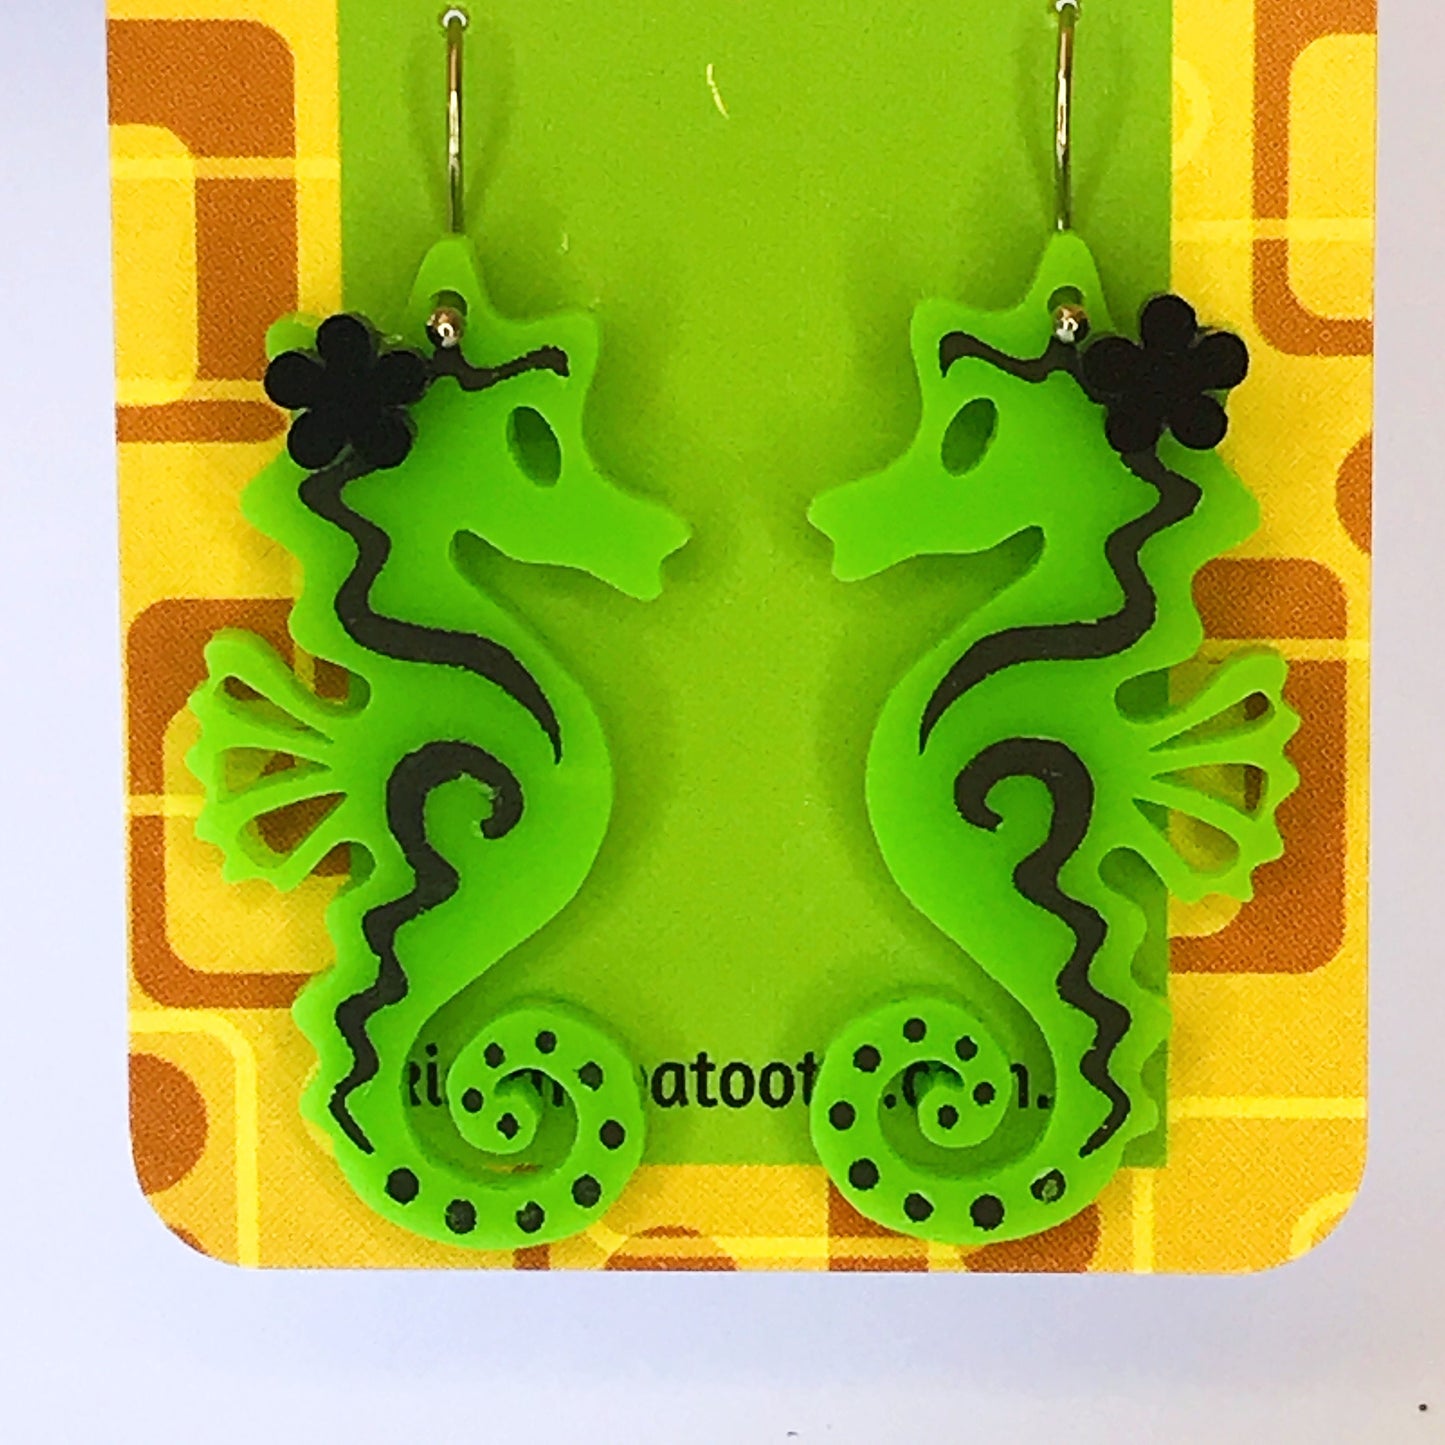 Seahorse Earrings - laser cut acrylic - green